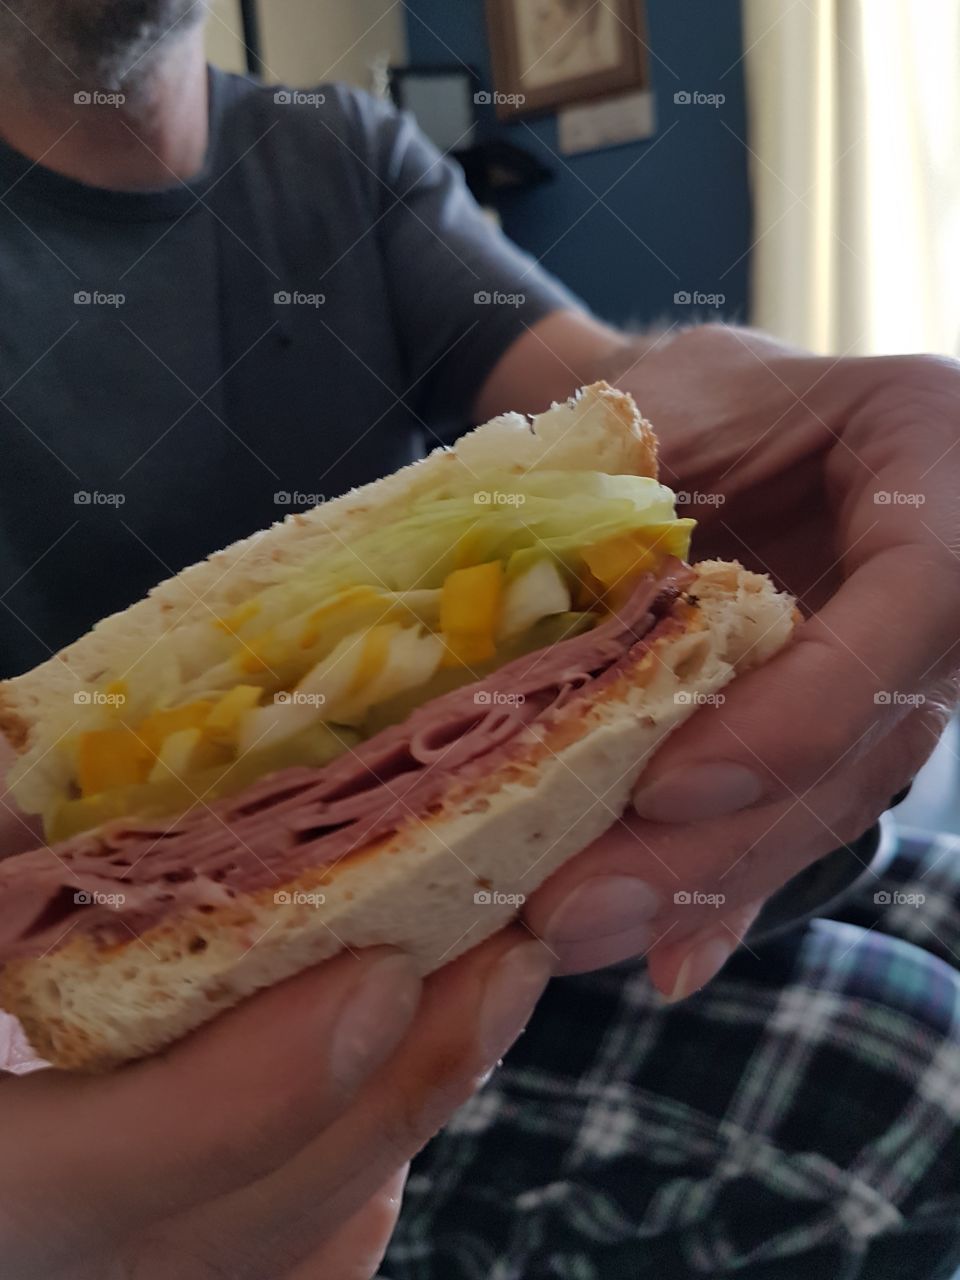 Now that's a sandwich!